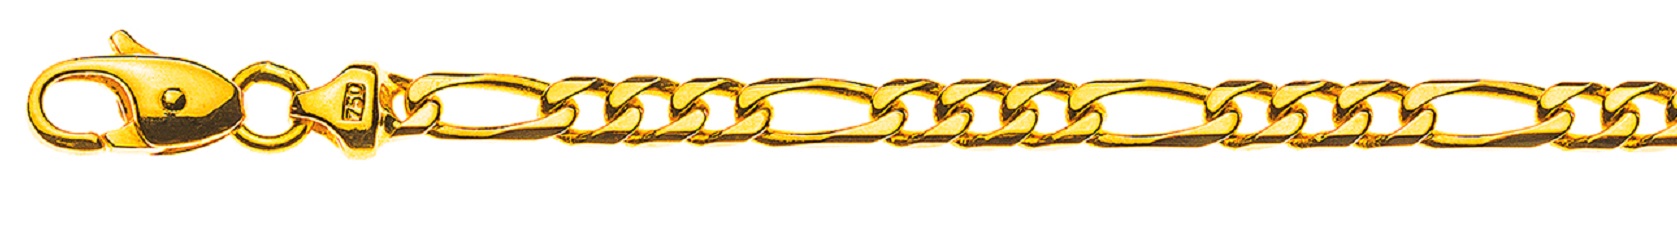 AURONOS Style Collier Figaro en or jaune 9K 55cm 4mm